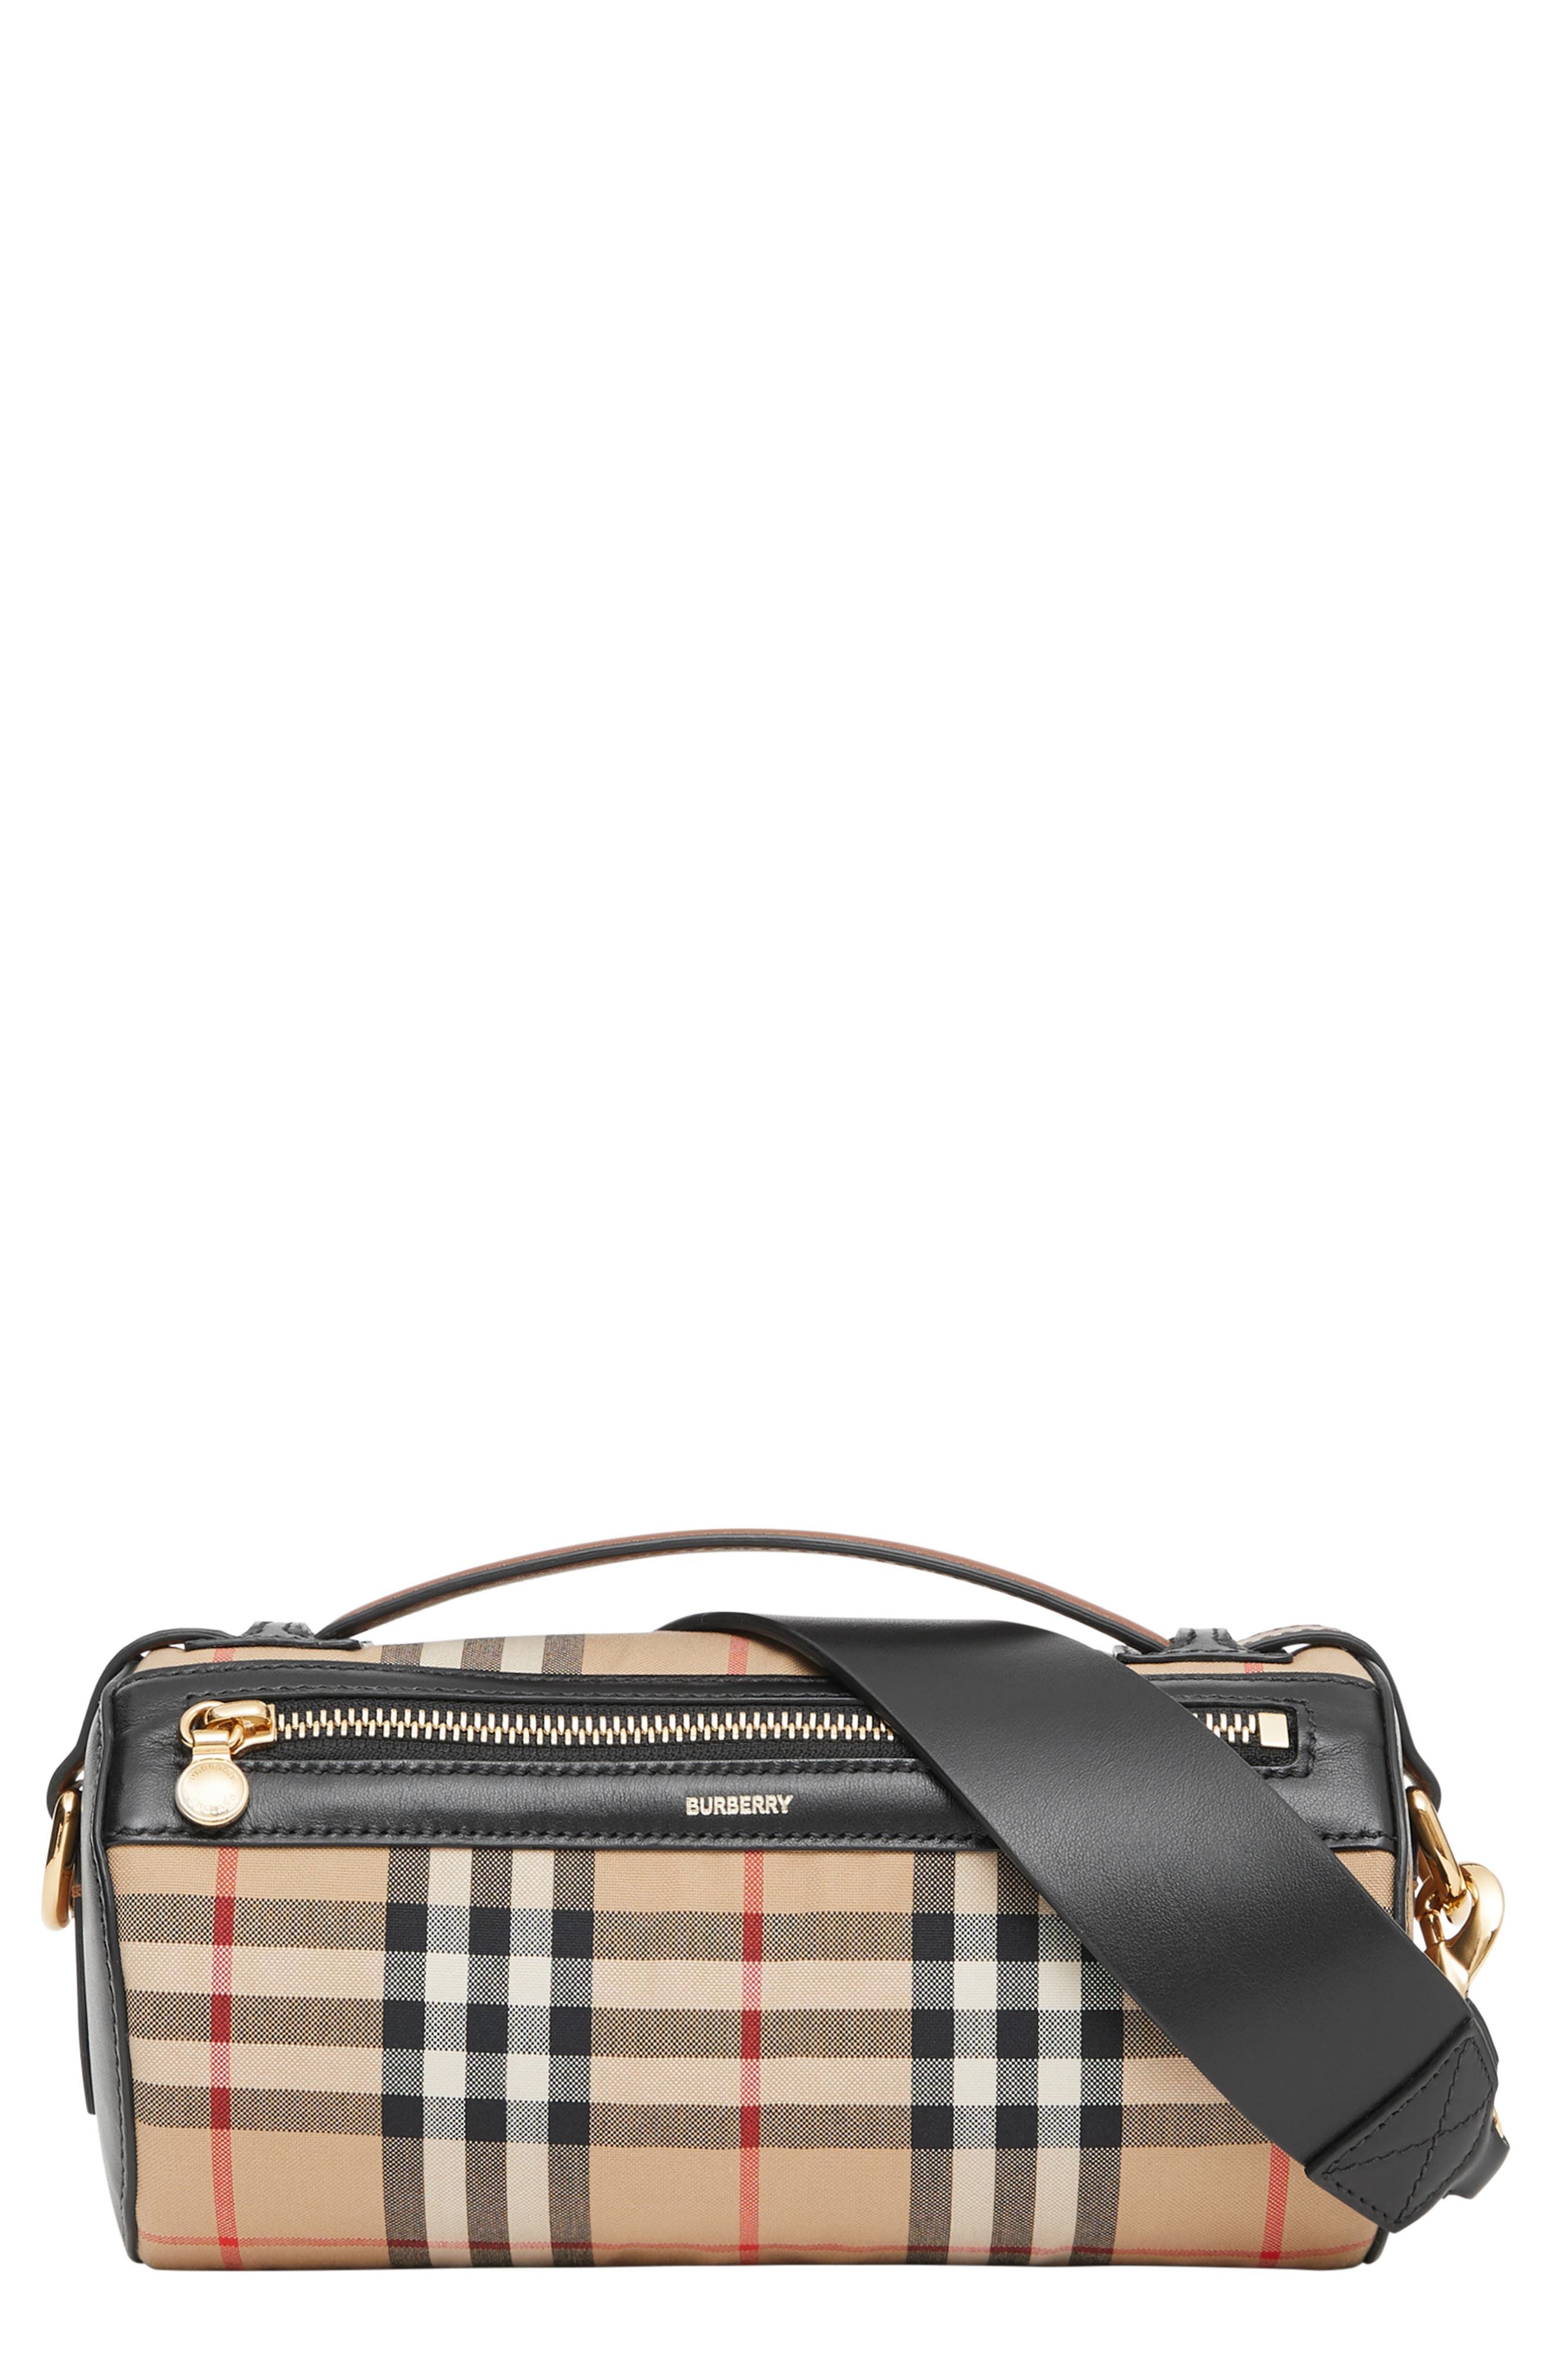 burberry check satchel handbag